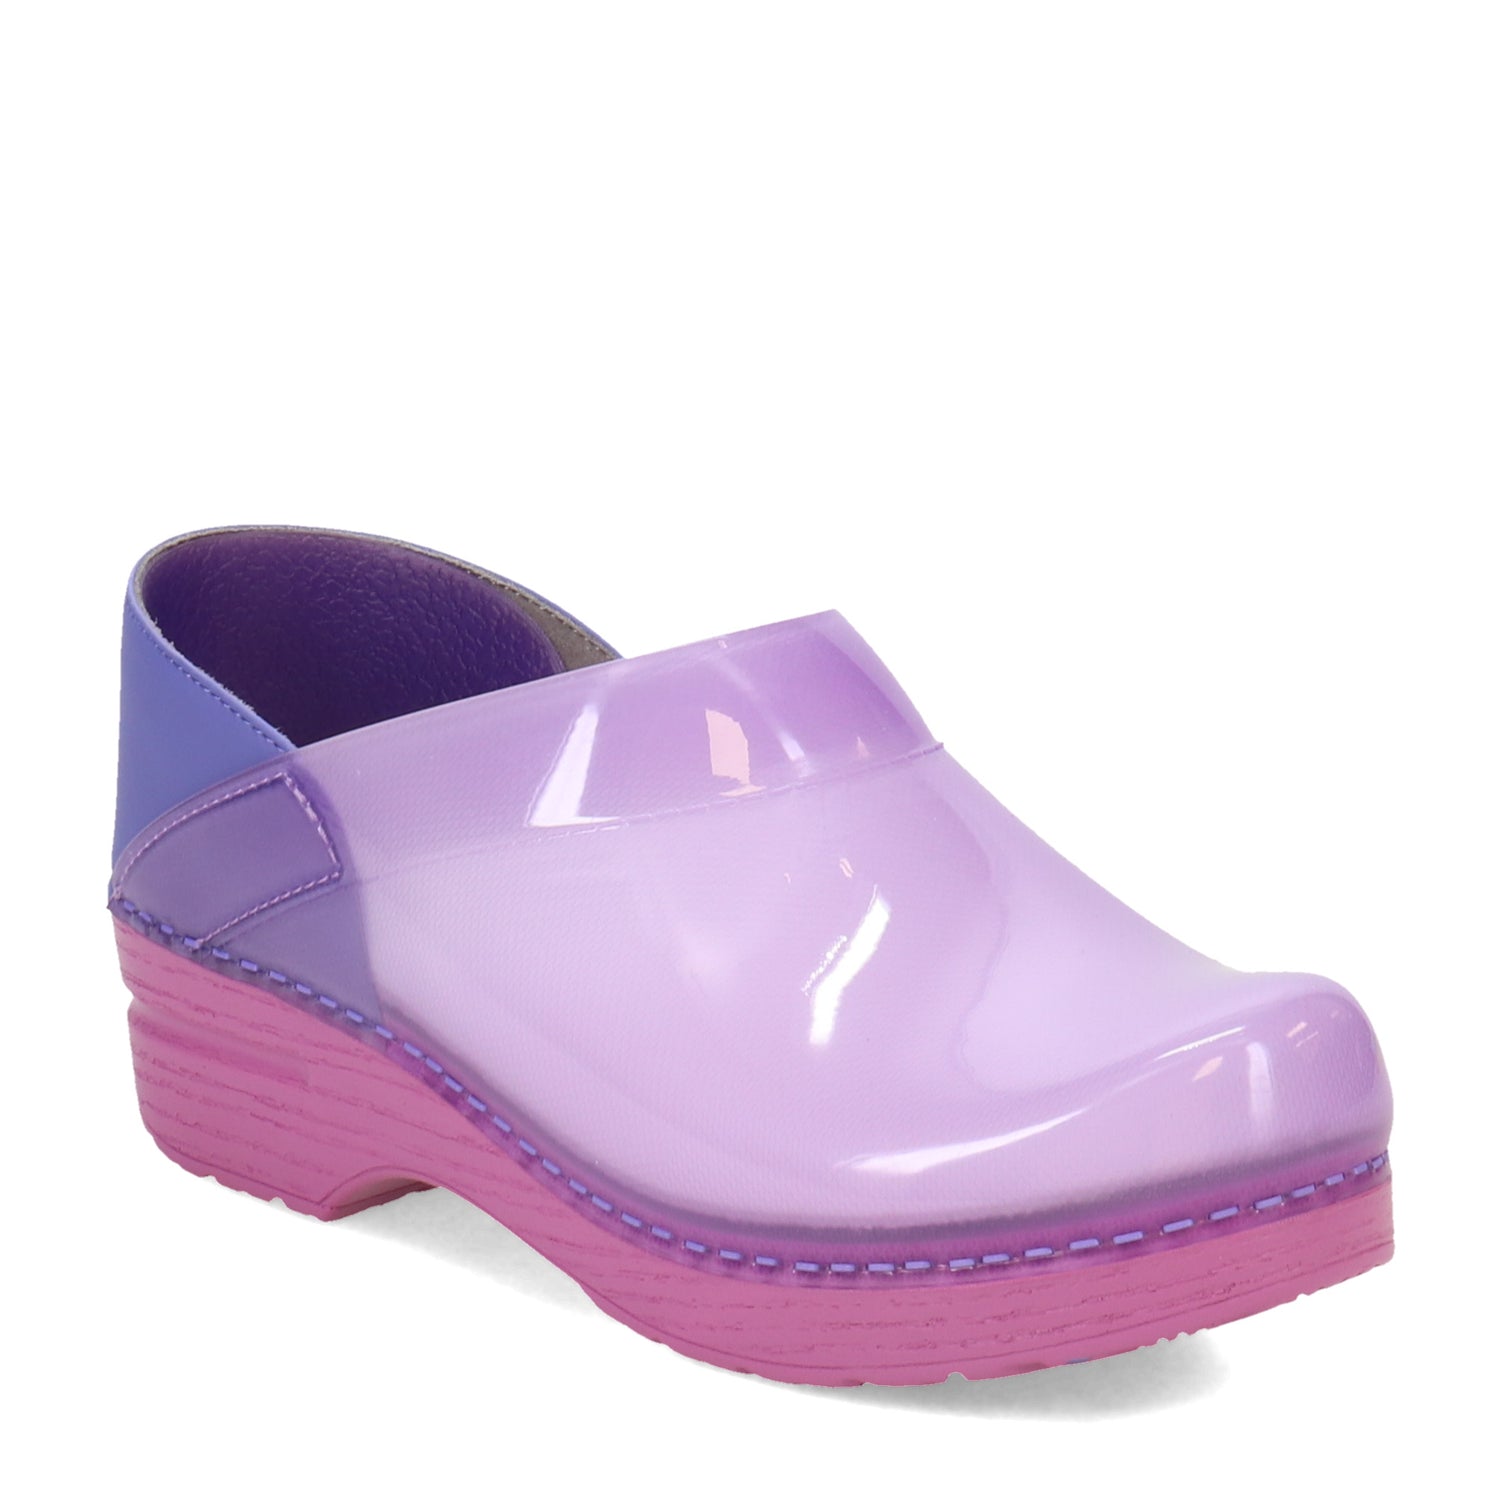 Peltz Shoes  Women's Dansko Professional Clog Purple 006-495985